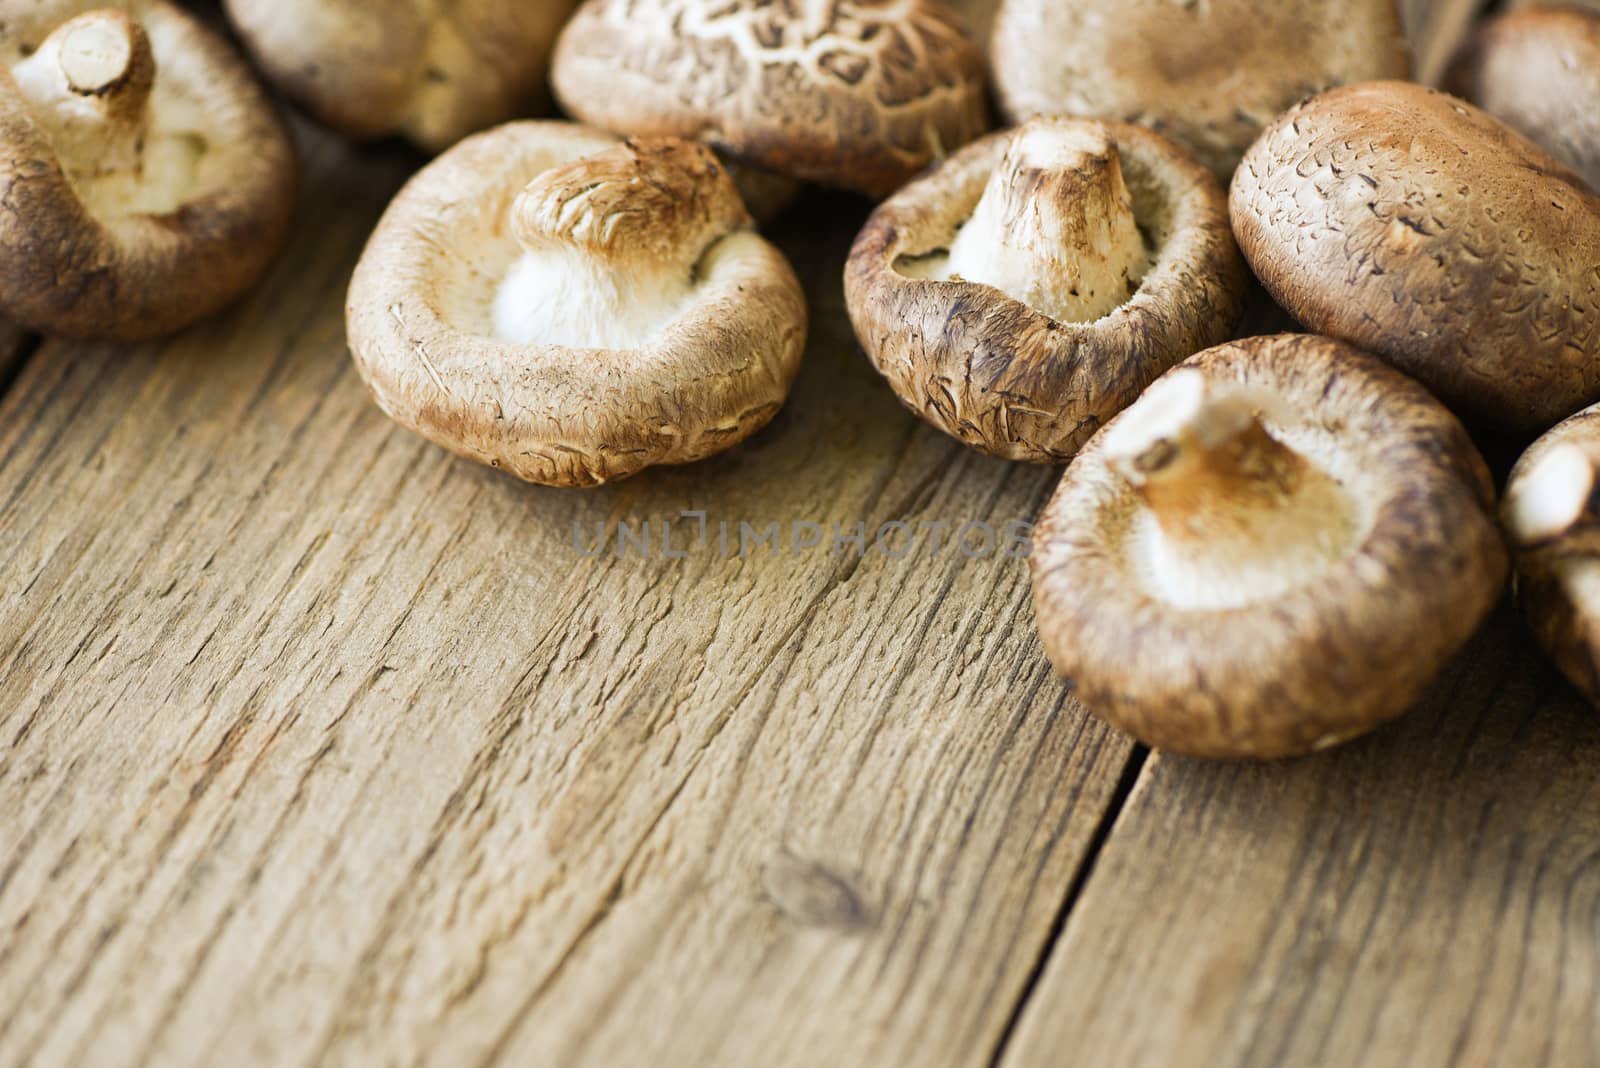 Fresh mushrooms on wooden table background / Shiitake mushrooms